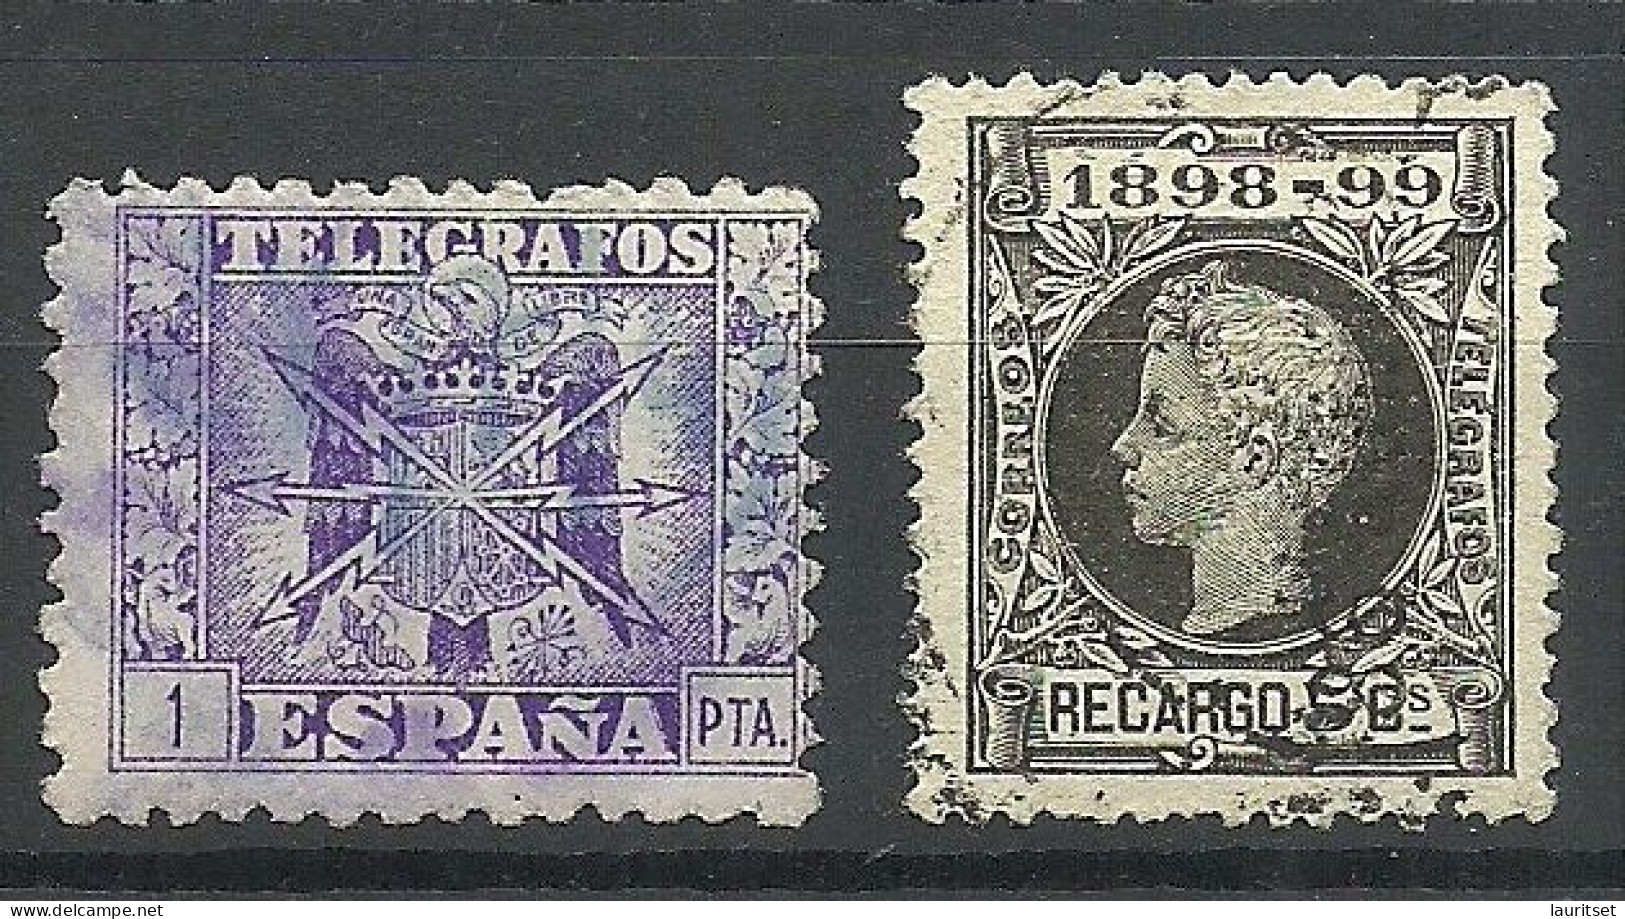 SPAIN Spanien Espana Telegrafos Telegraph Stamps Telegraphe, 2 Stamps, O - Telegrafi